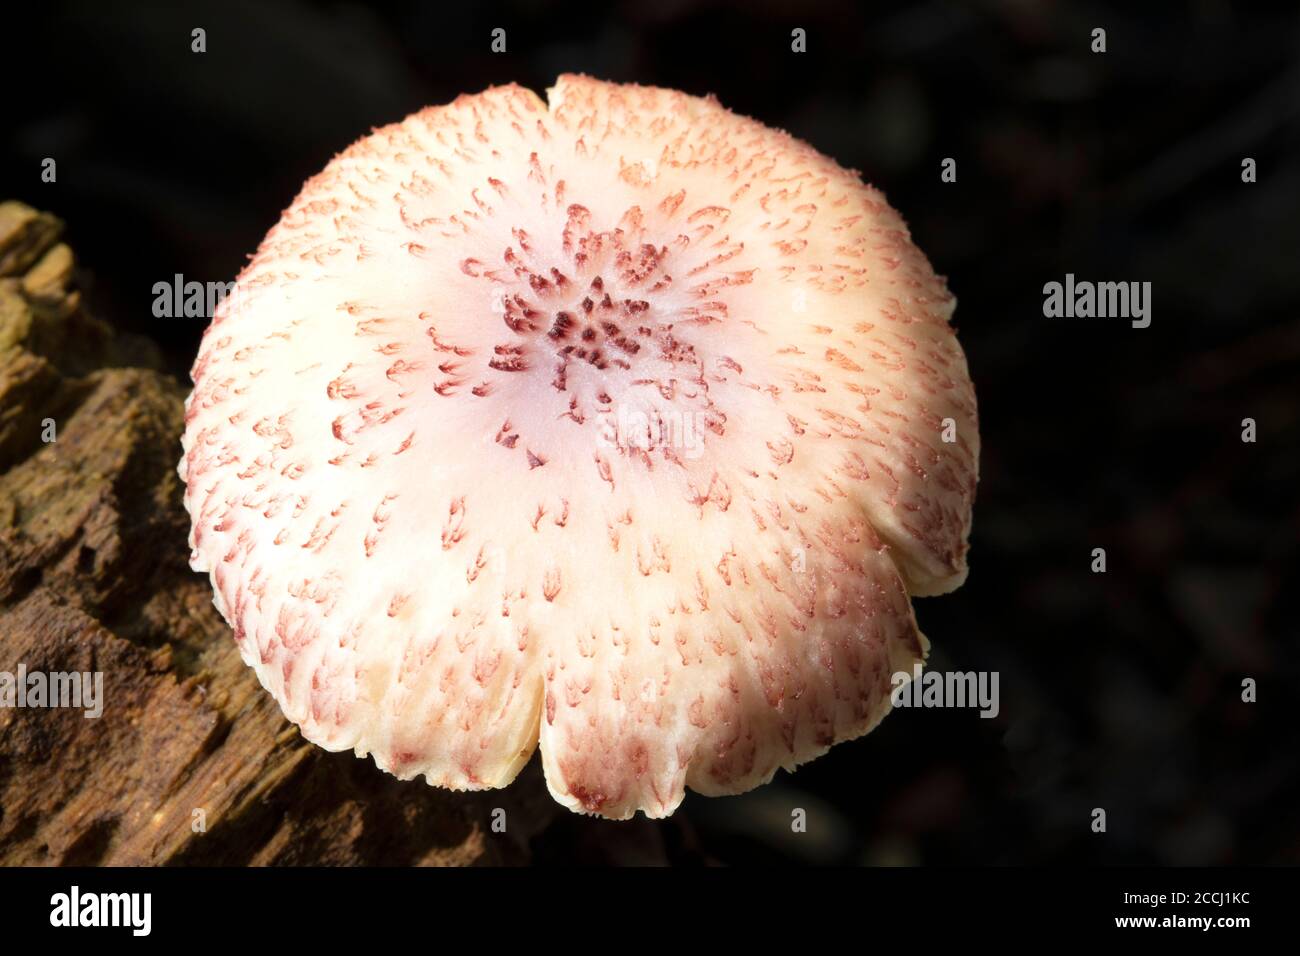 White mushroom on decayed wood. Stock Photo